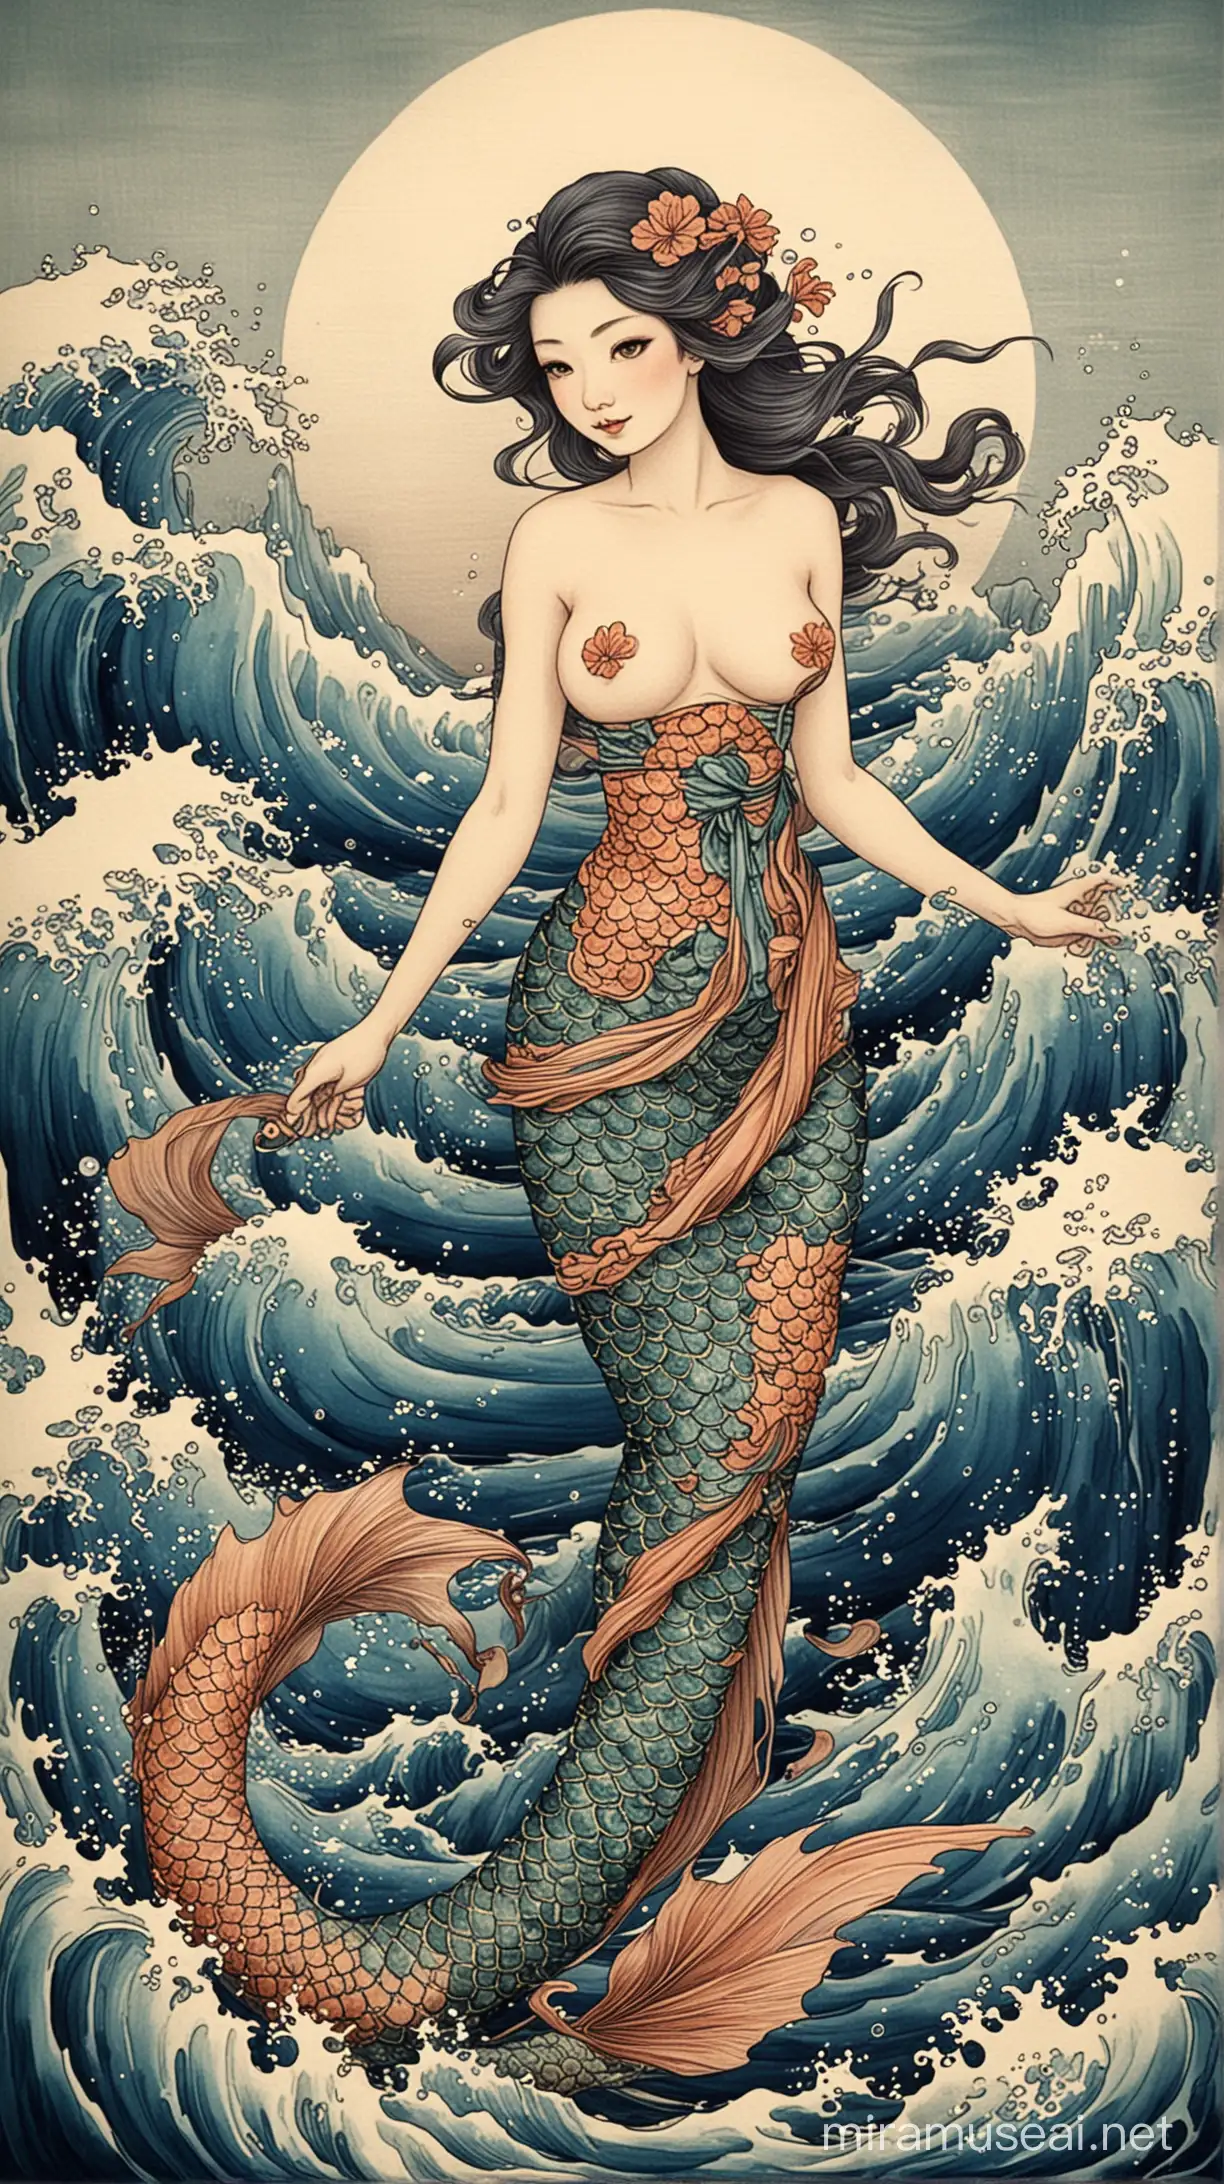 Hokusai style mermaid